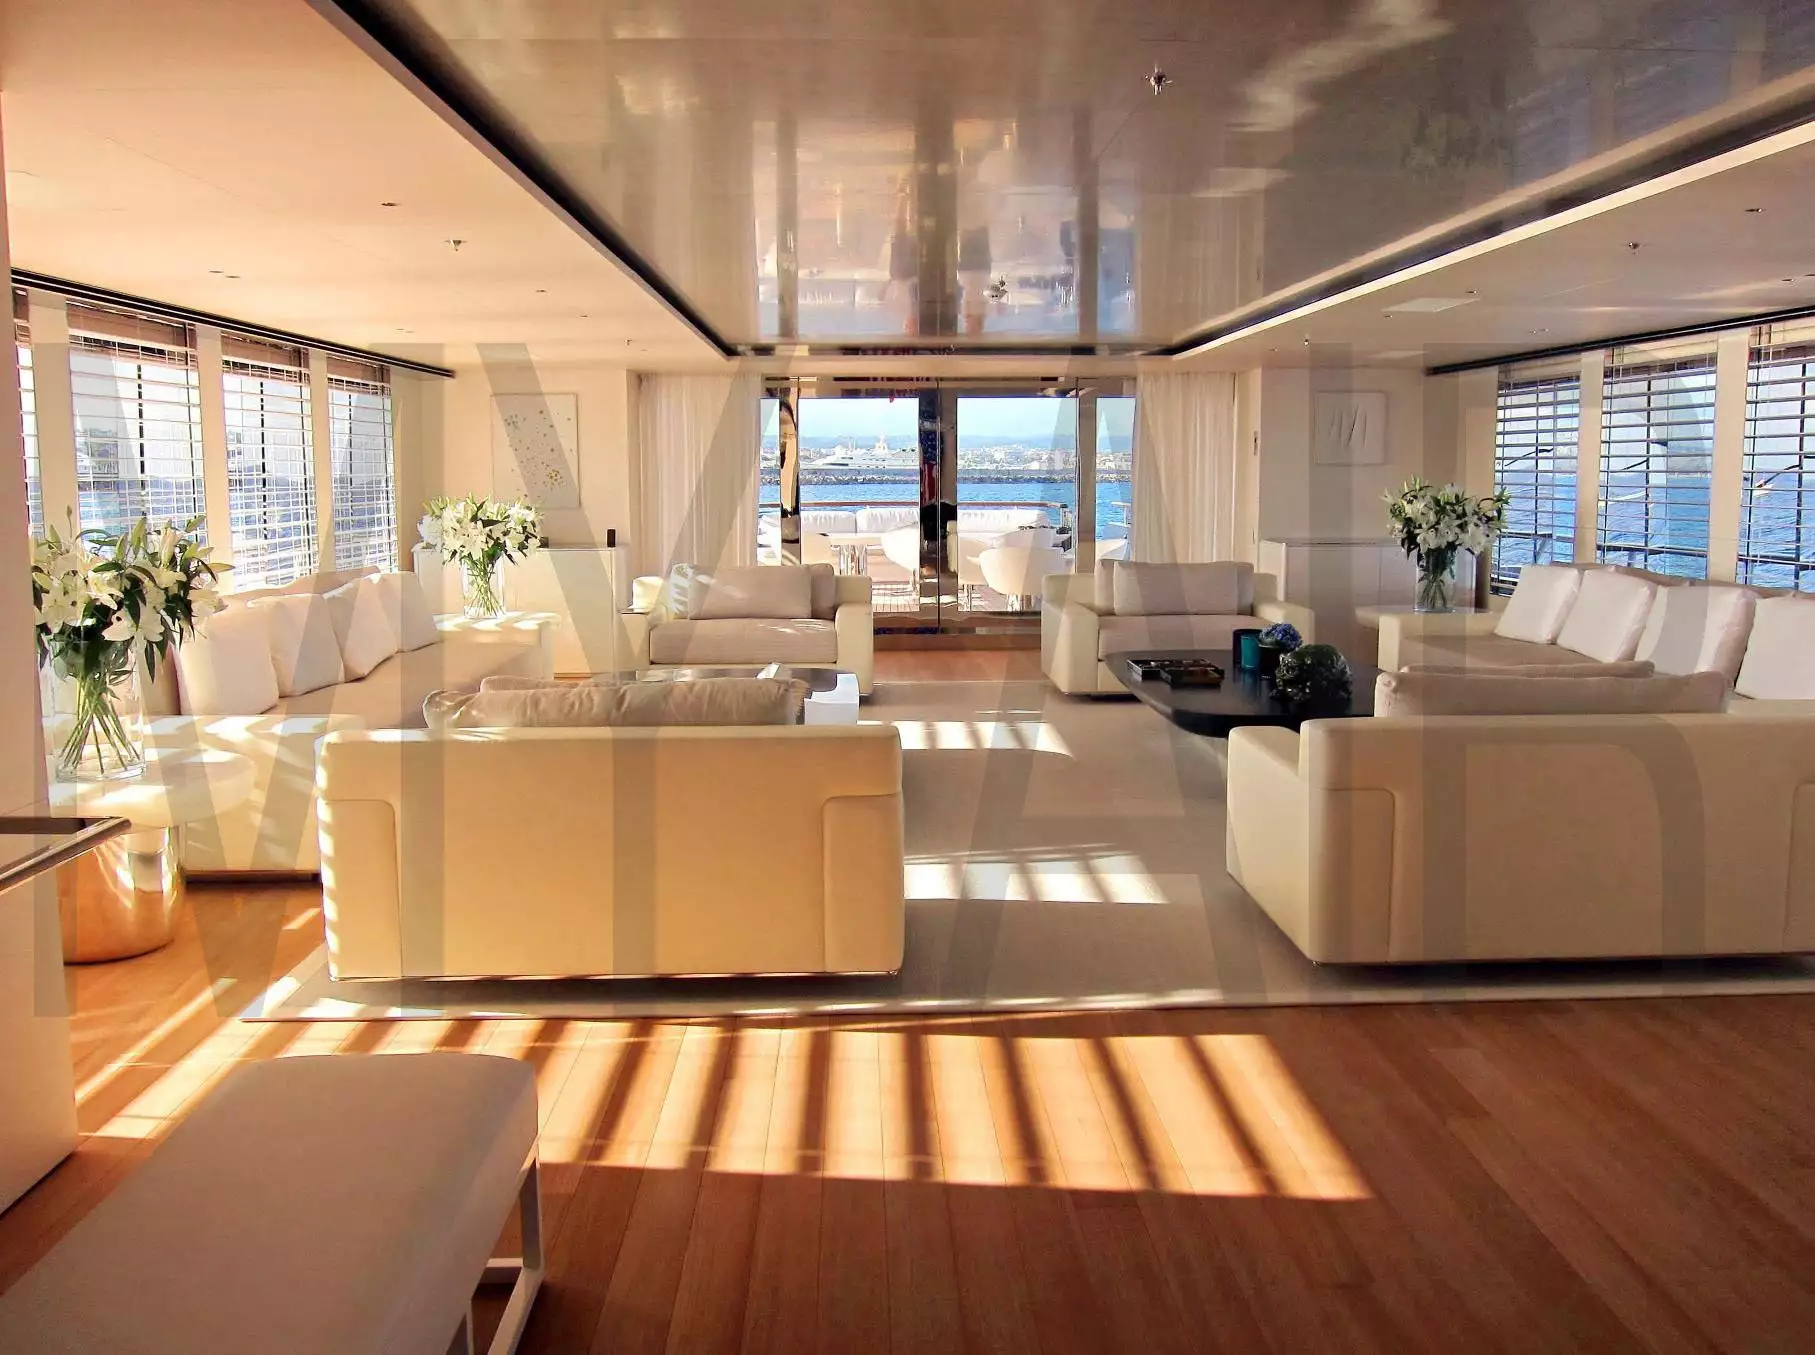 Yacht Air interior